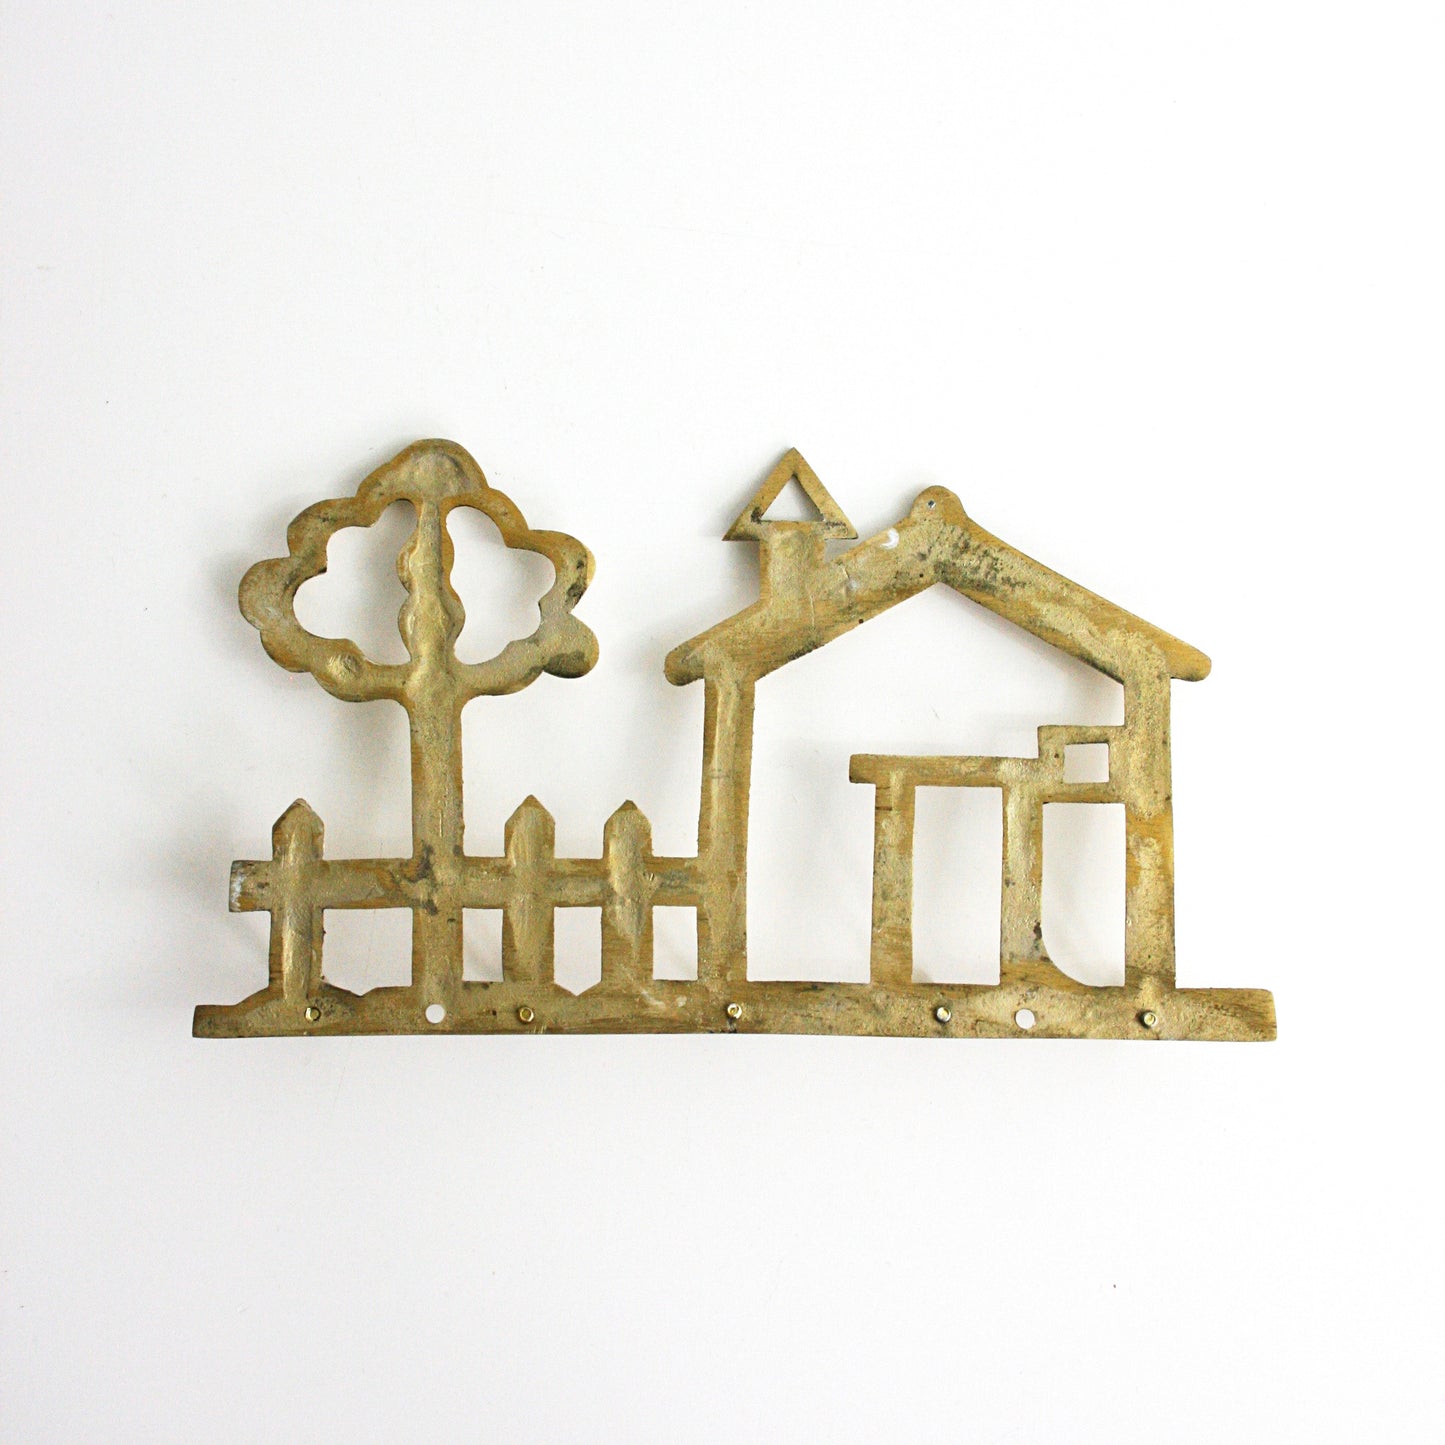 SOLD - Vintage Brass House Wall Hooks / Metal Neighborhood Key Rack